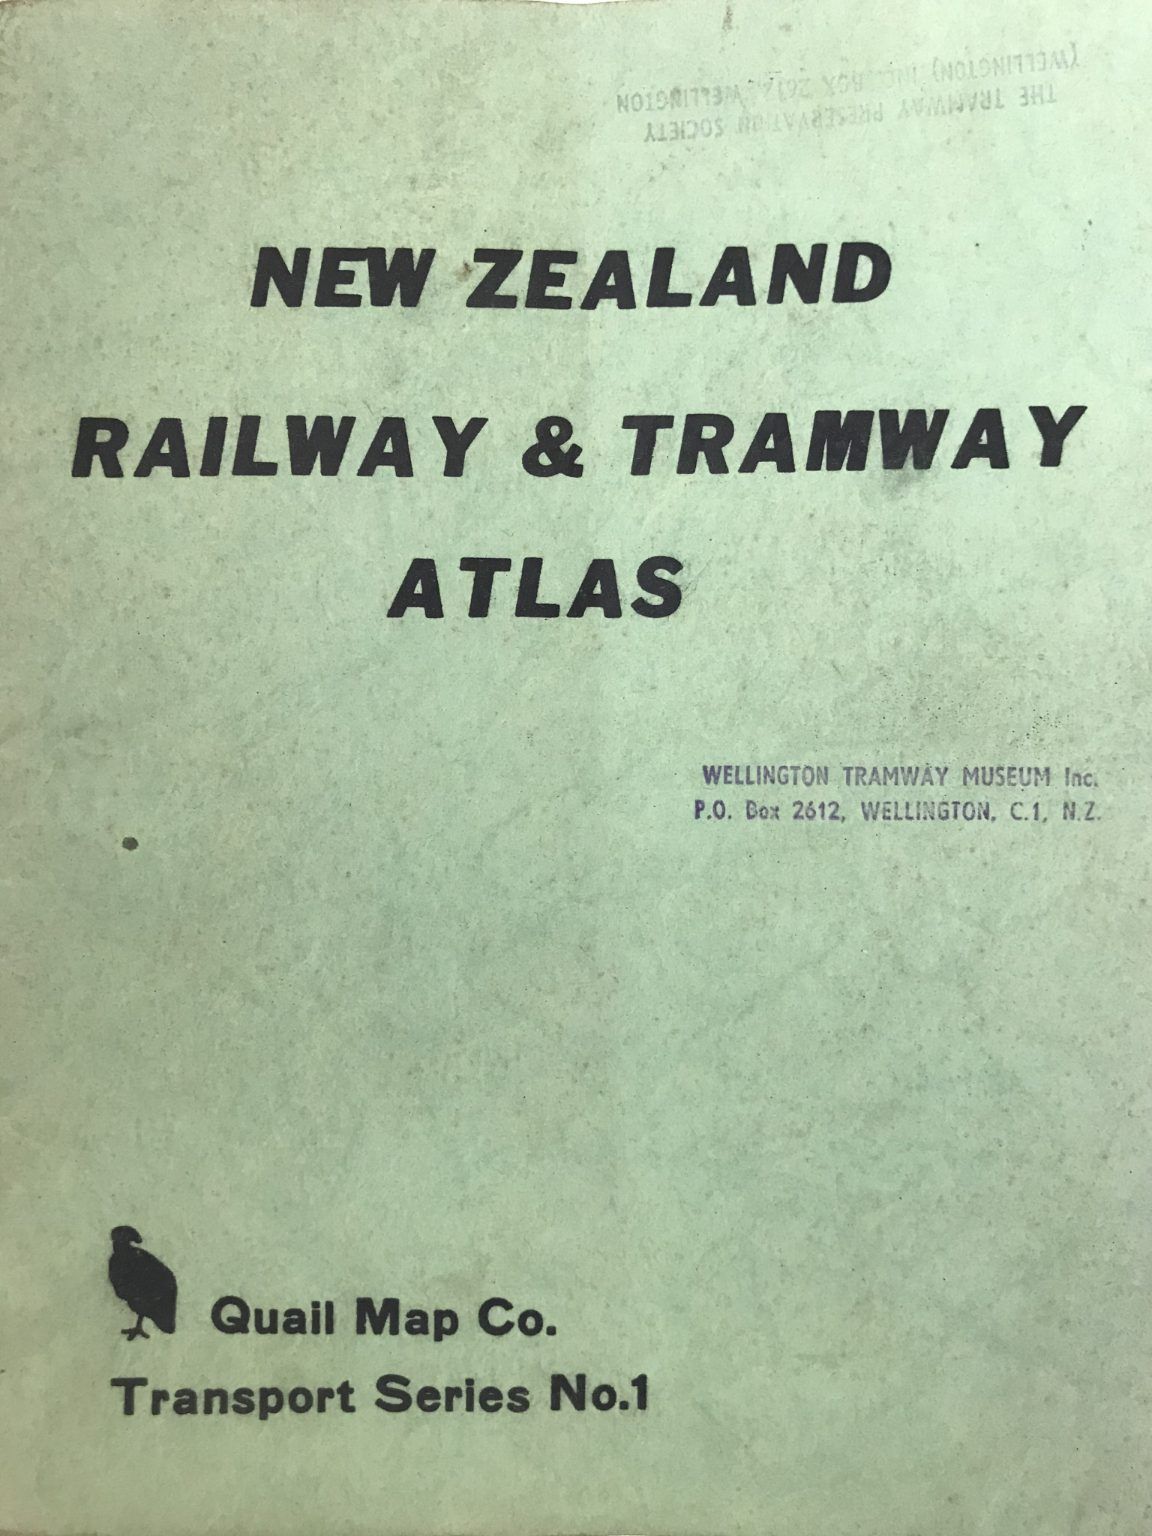 NEW ZEALAND RAILWAY & TRAMWAY ATLAS